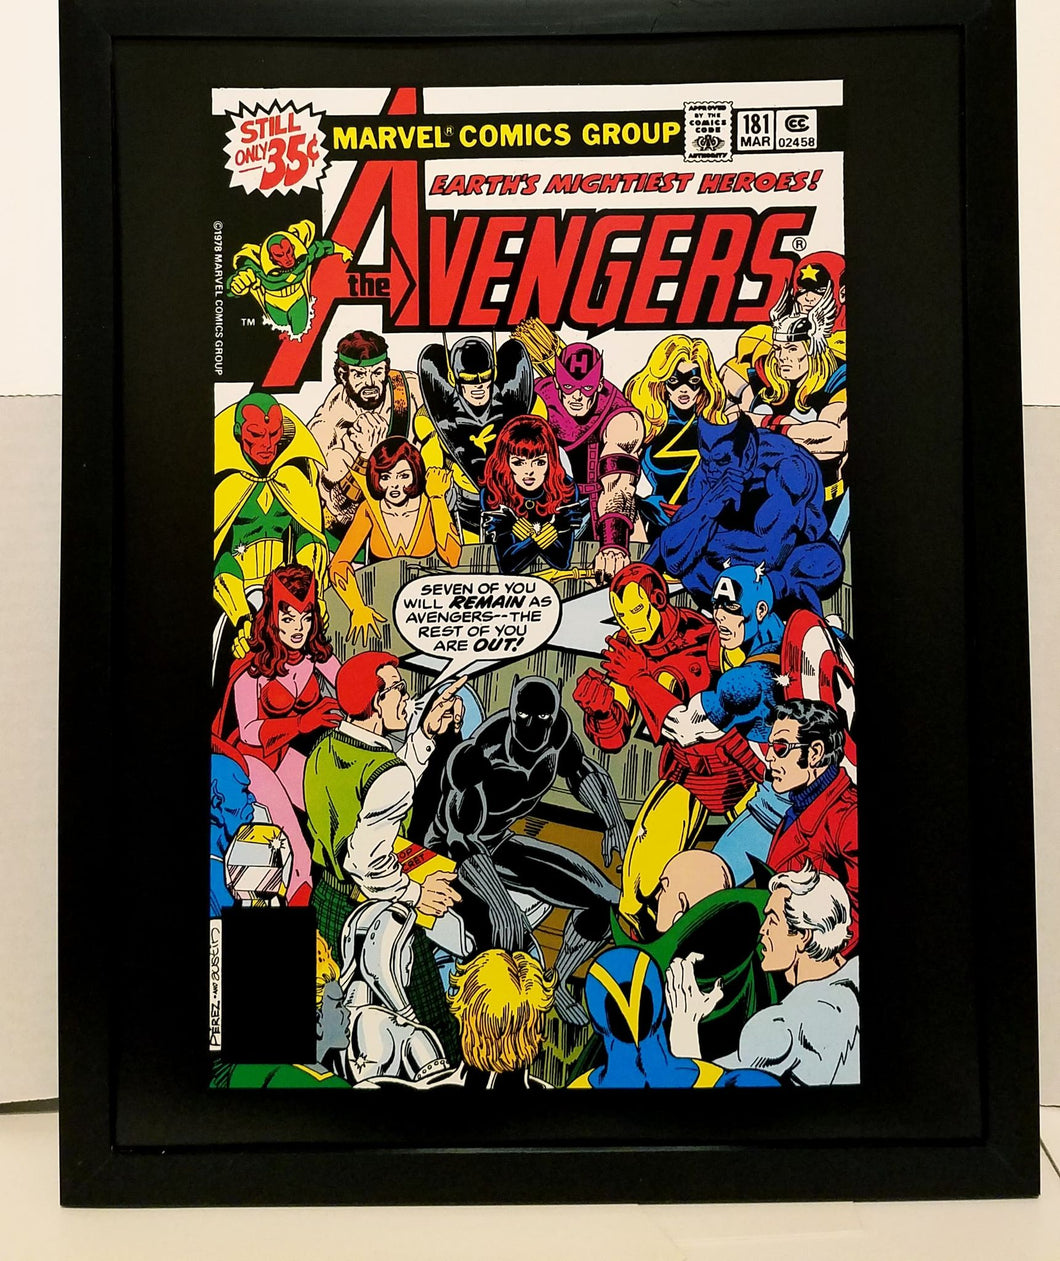 Avengers #181 by George Perez 11x14 FRAMED Marvel Comics Art Print Poster